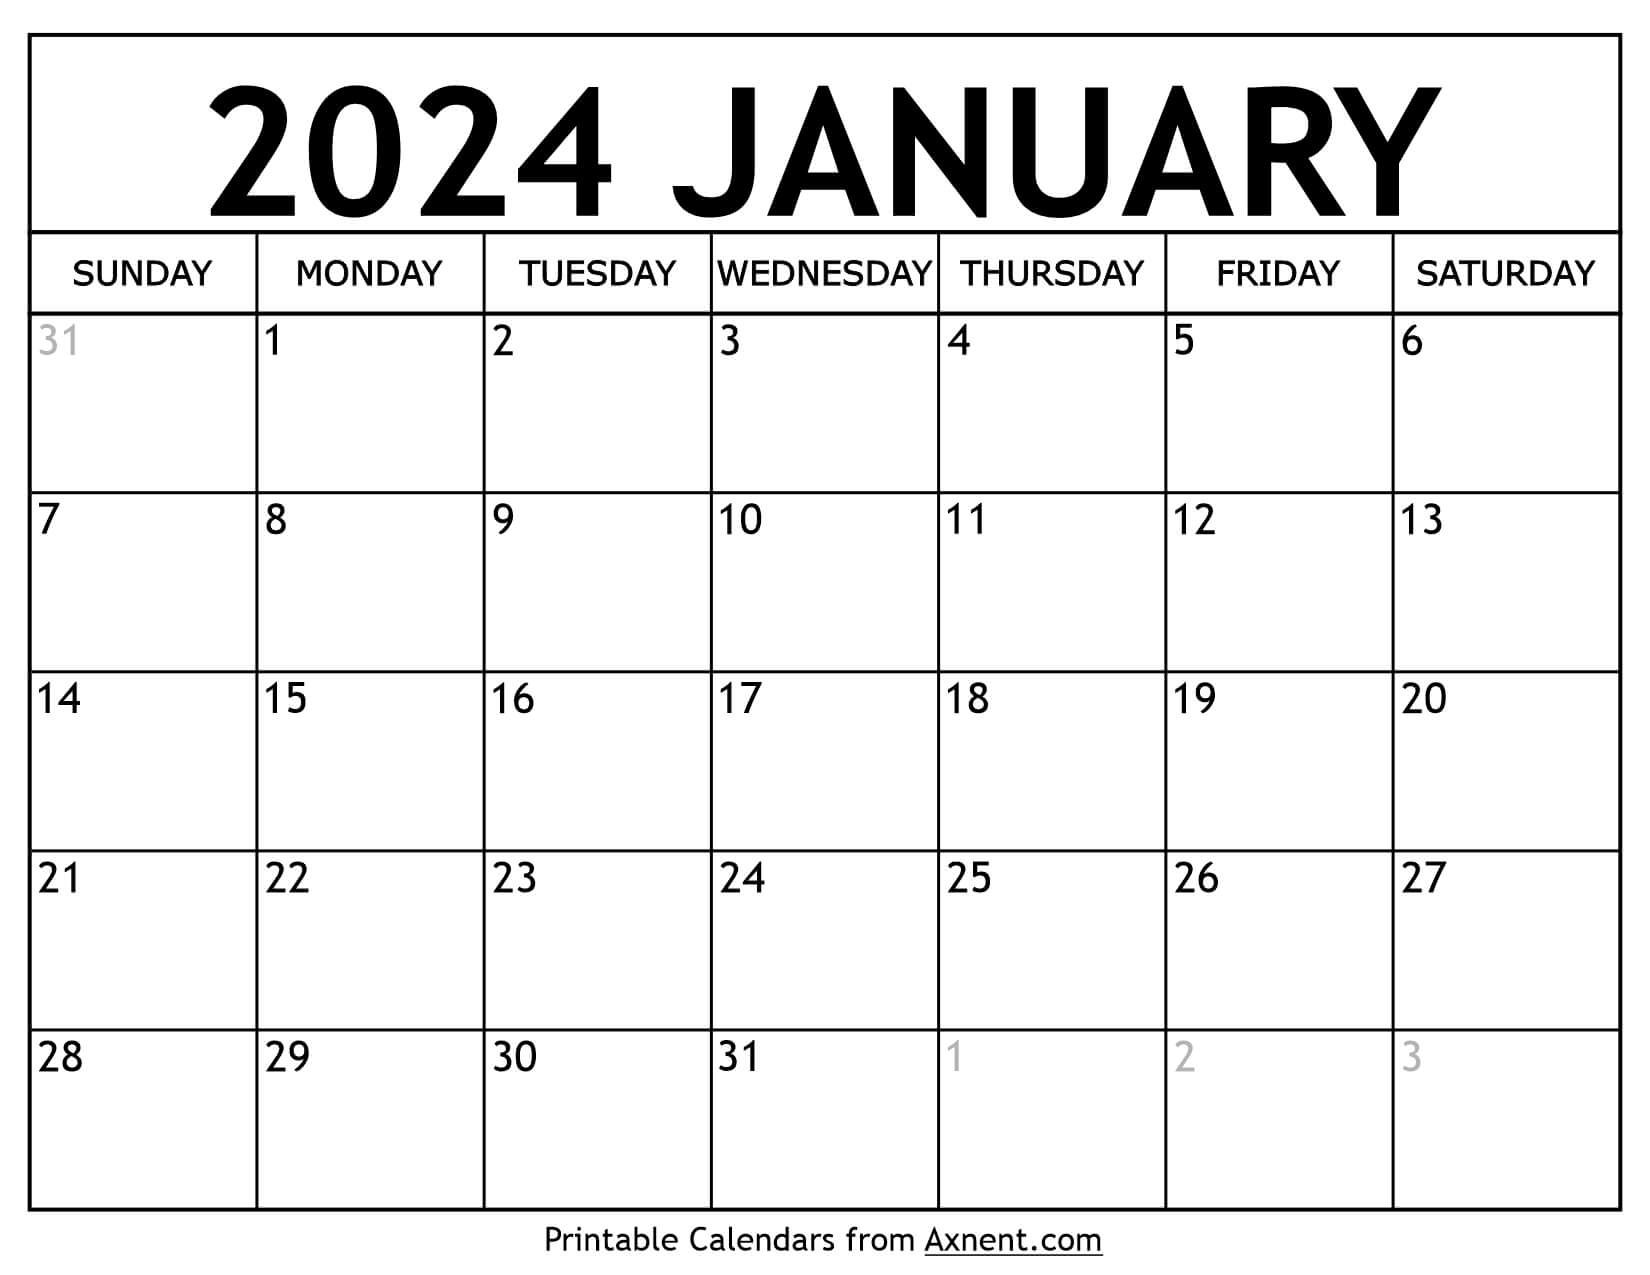 Printable January 2024 Calendar Template - Print Now for Printable Calendar 2024 January